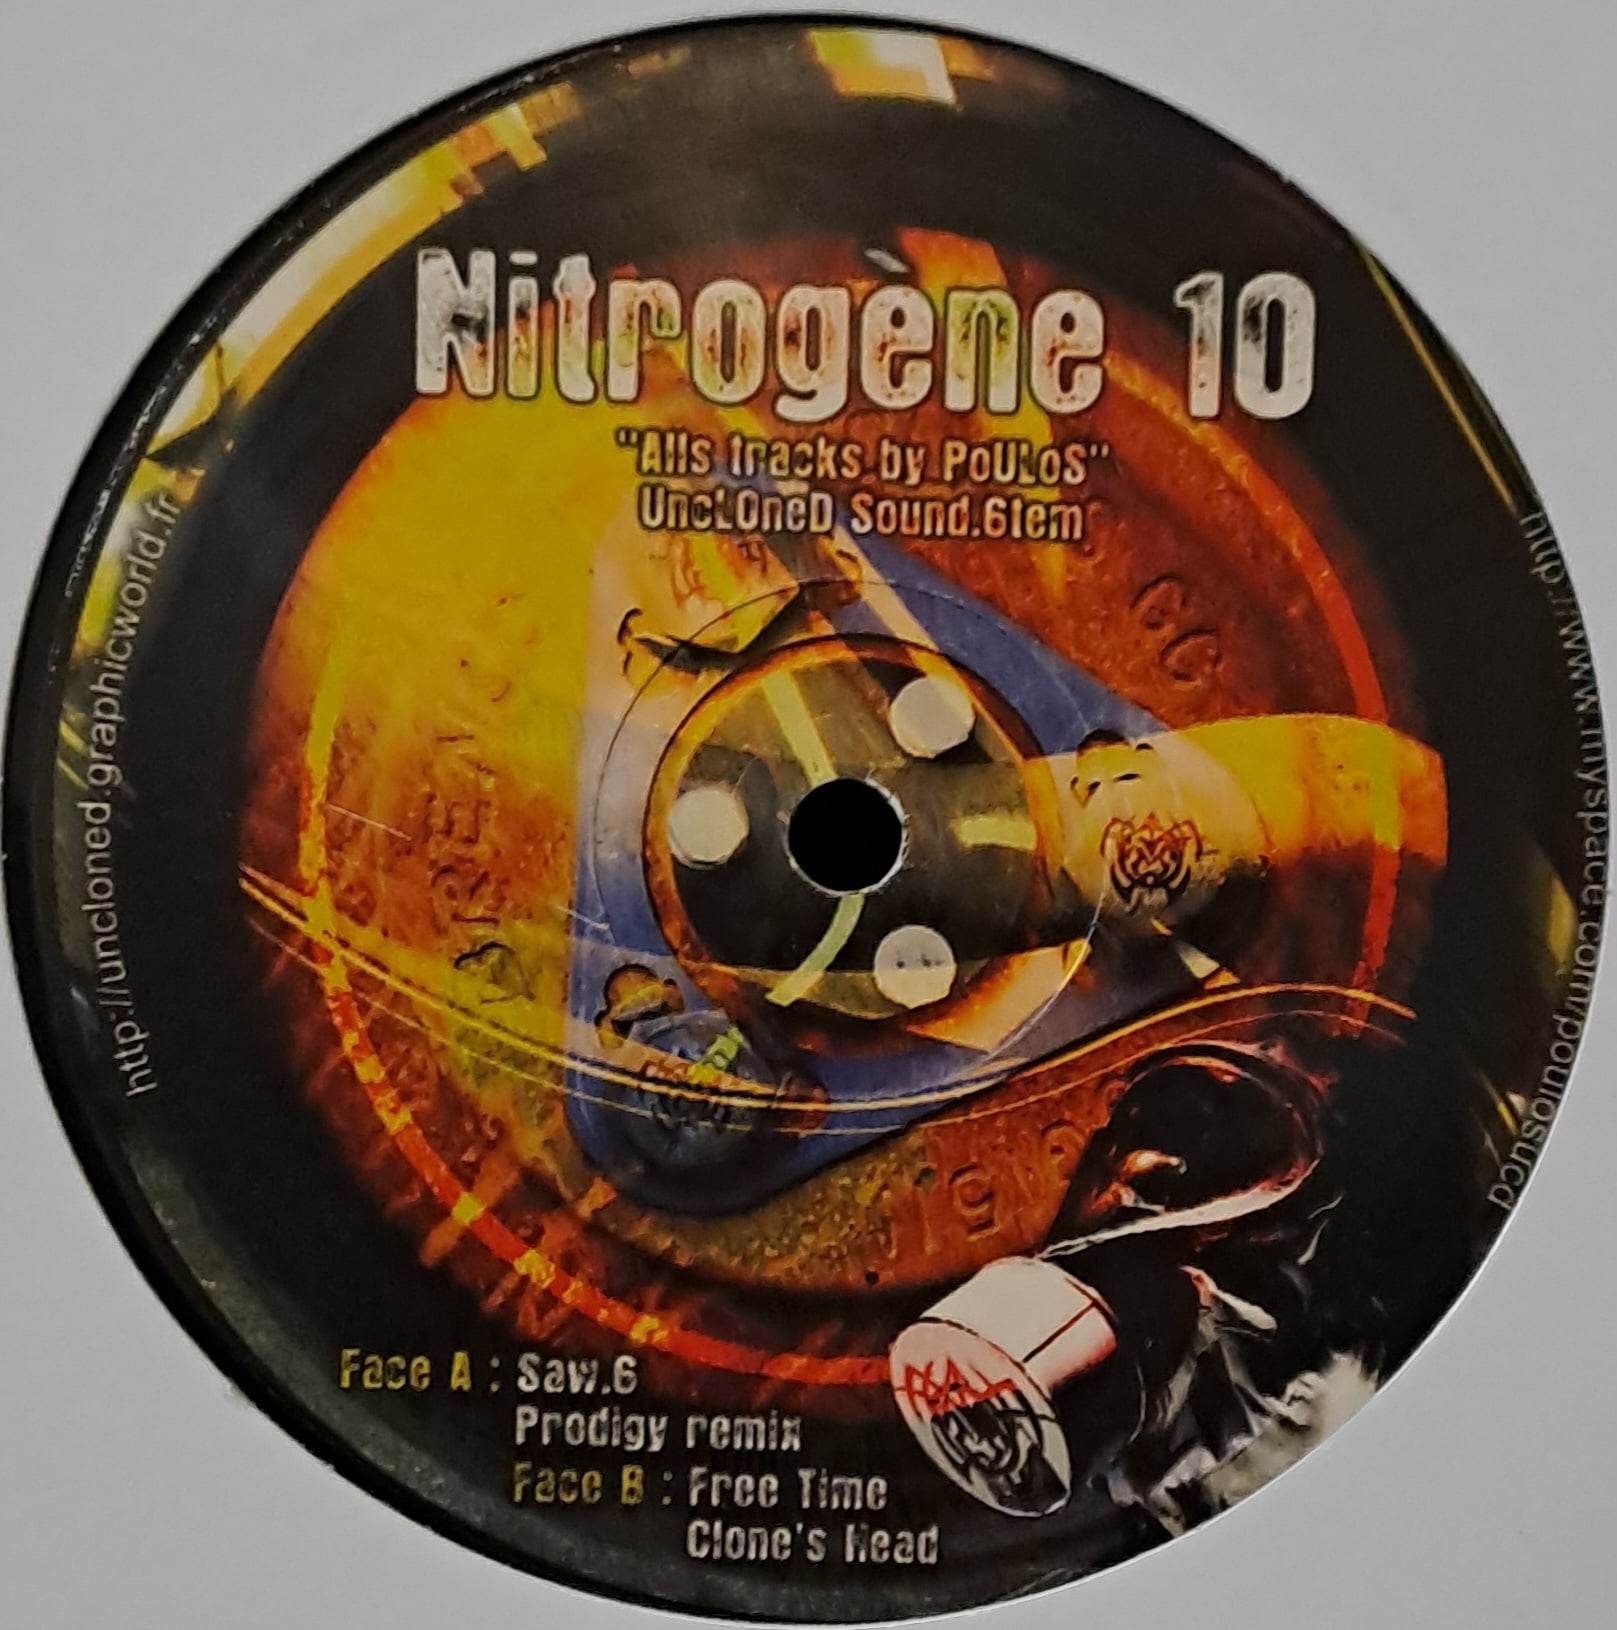 Nitrogene 10 - vinyle freetekno